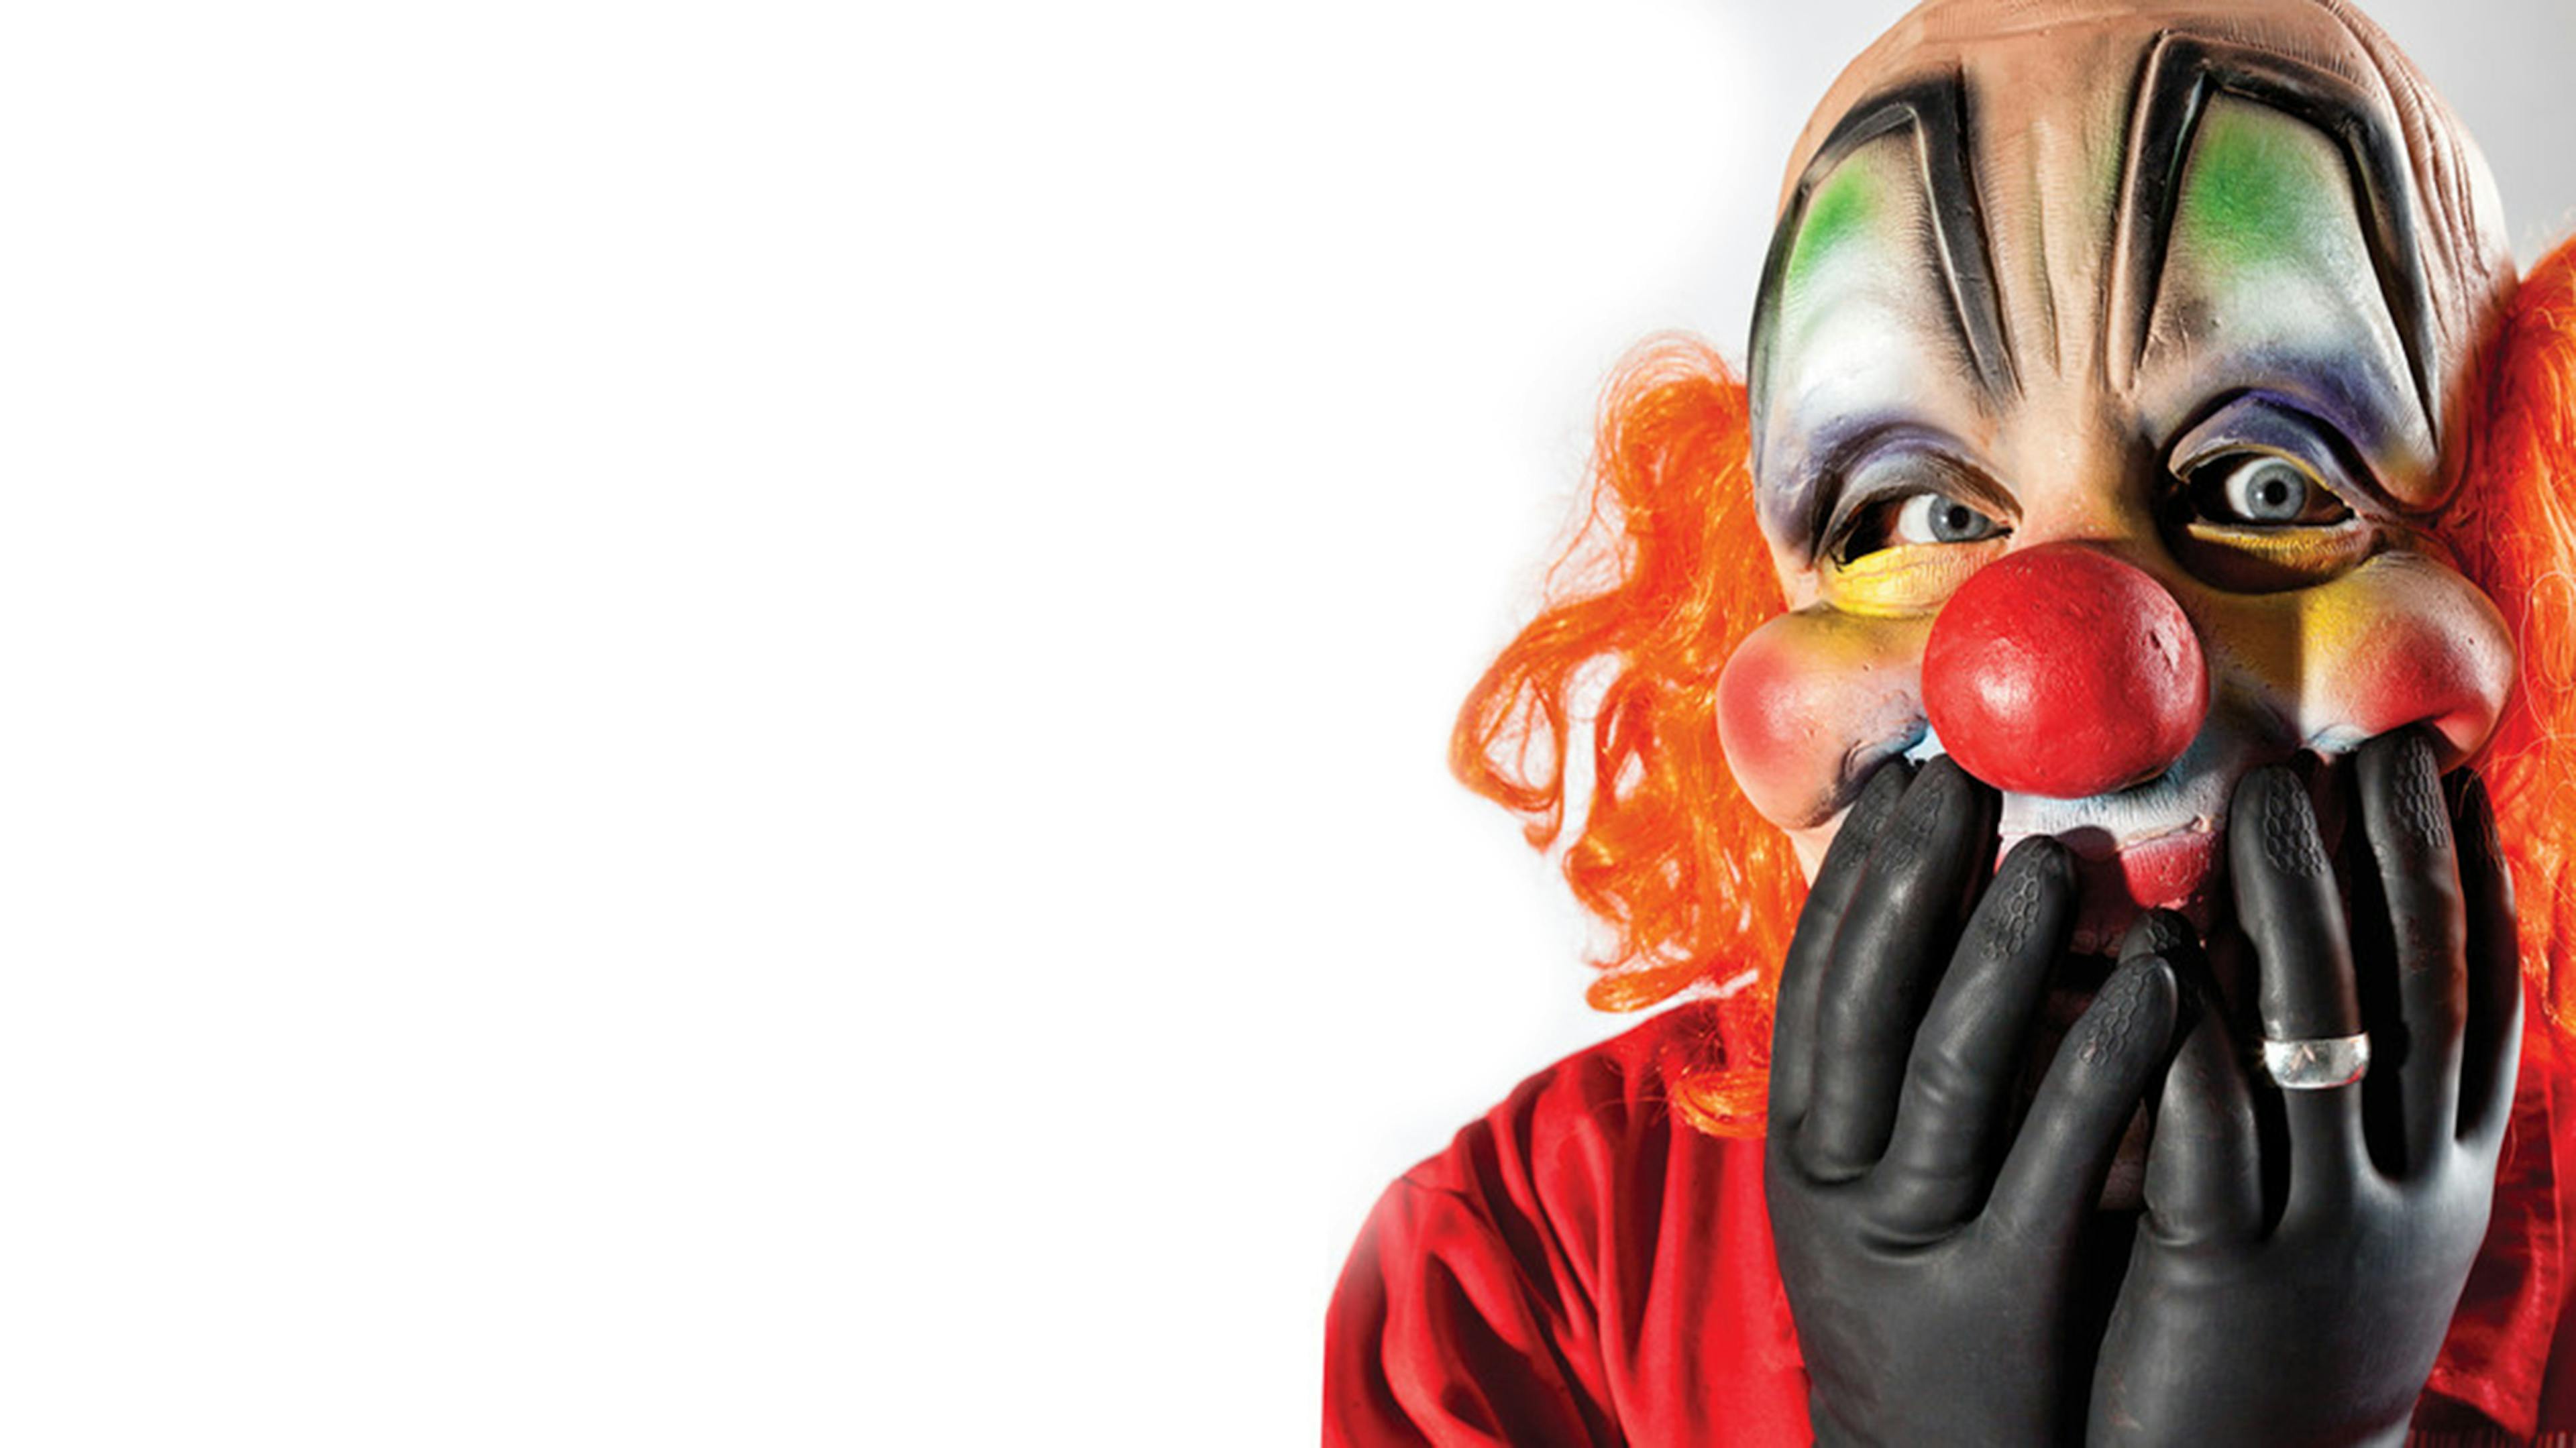 Slipknot's Clown Is Planning Some "Fascinating Art" For 2020